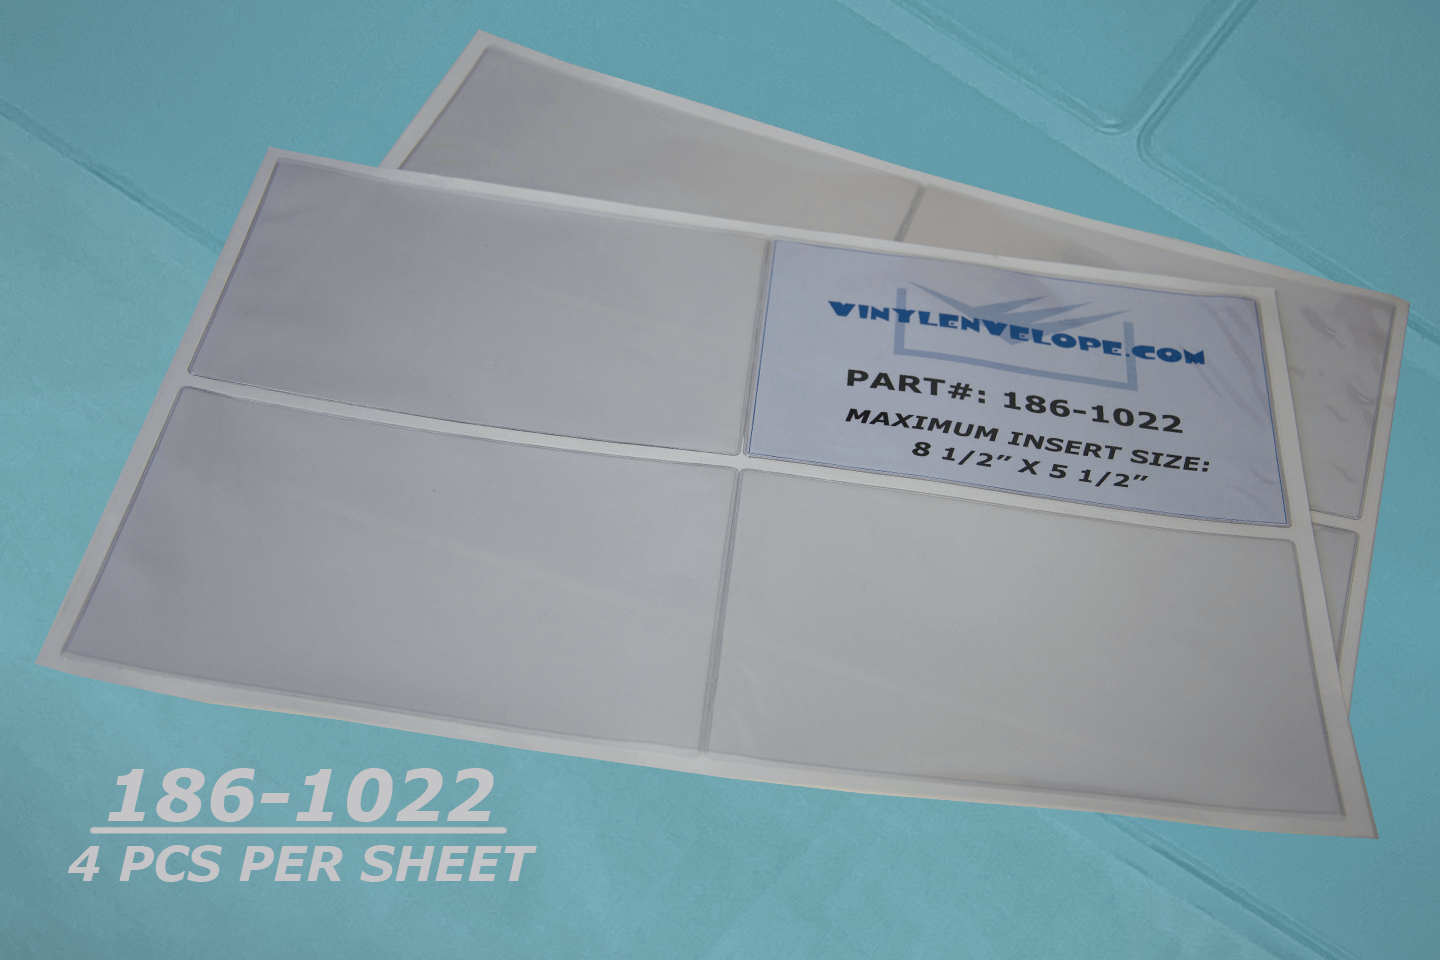 8 3/4" x 5 3/4" press-on vinyl envelope